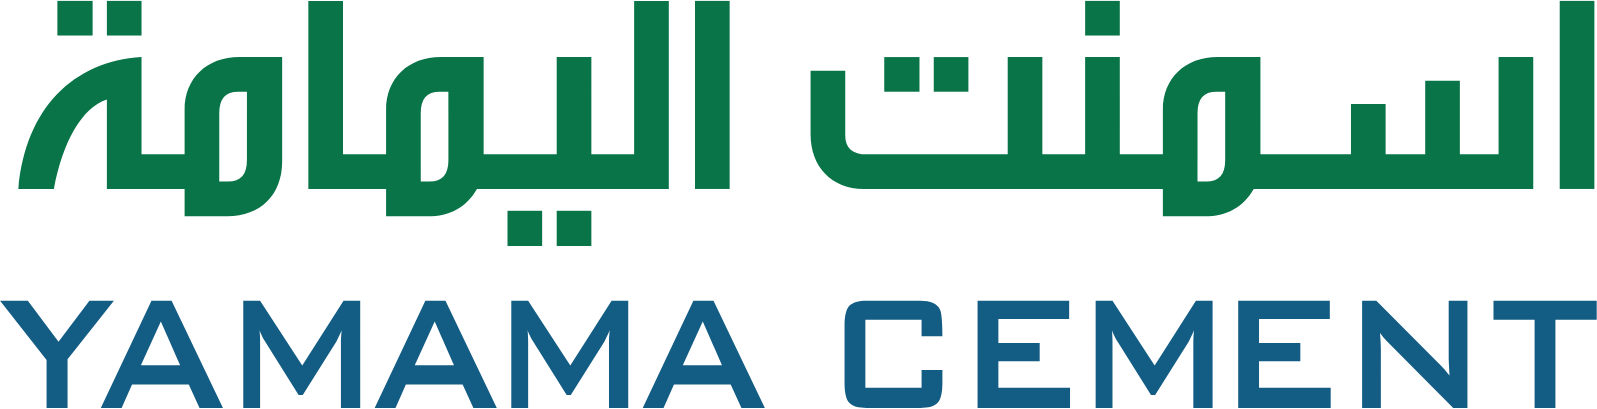 Yamama Saudi Cement Company logo (PNG transparent)